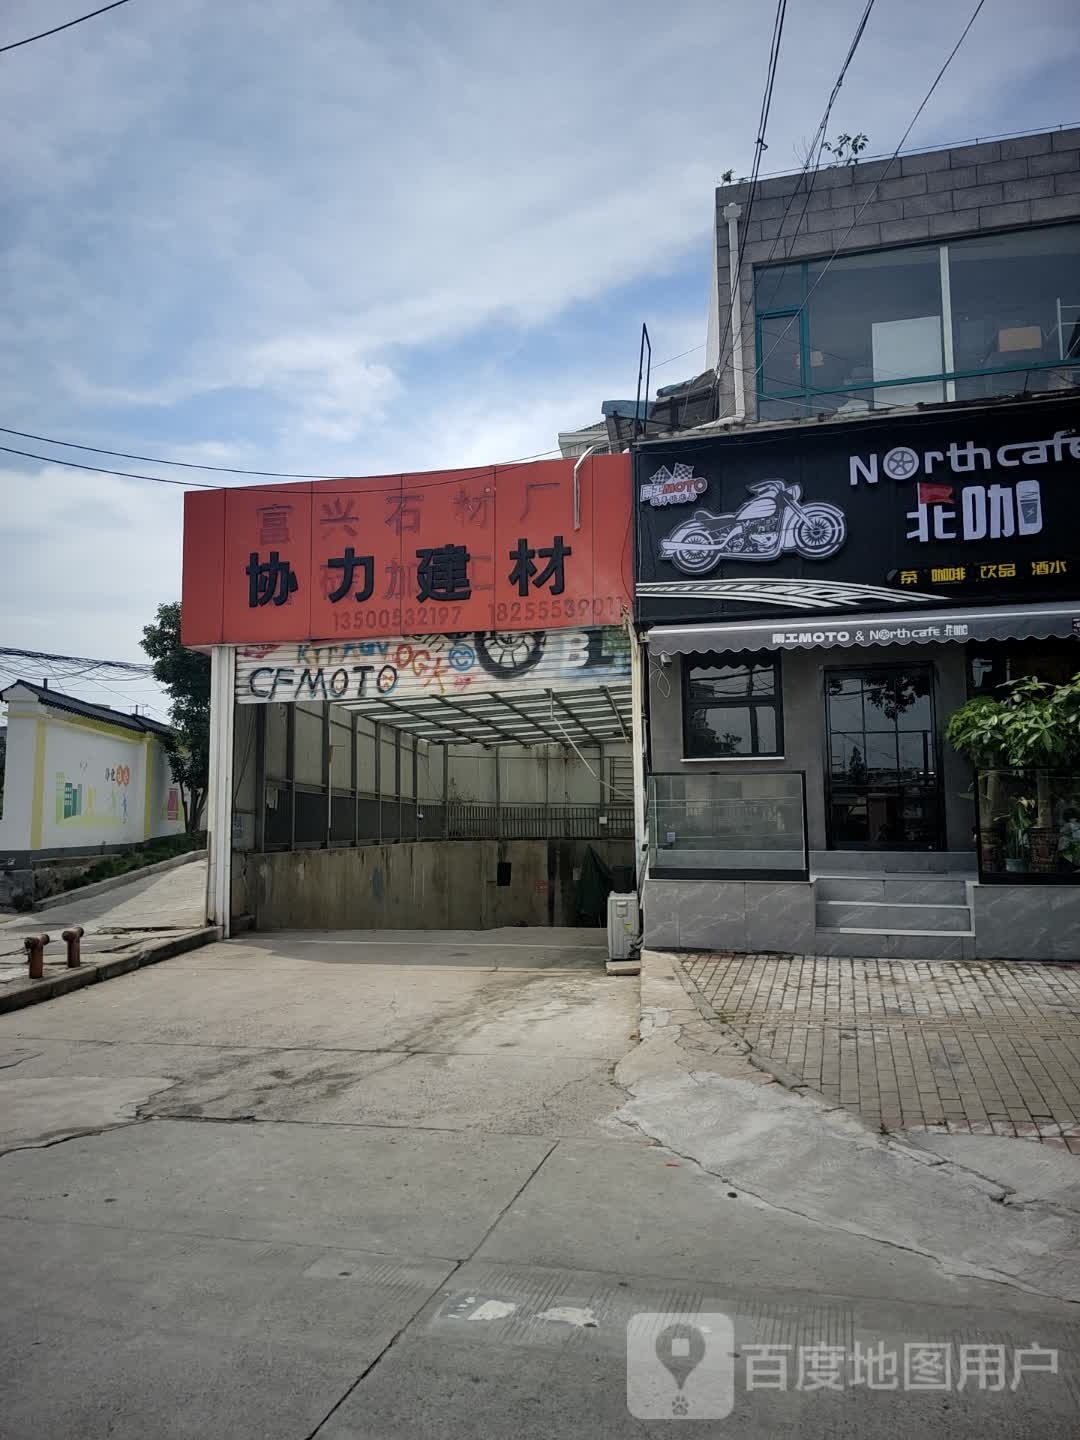 North caff北咖(花山路店)